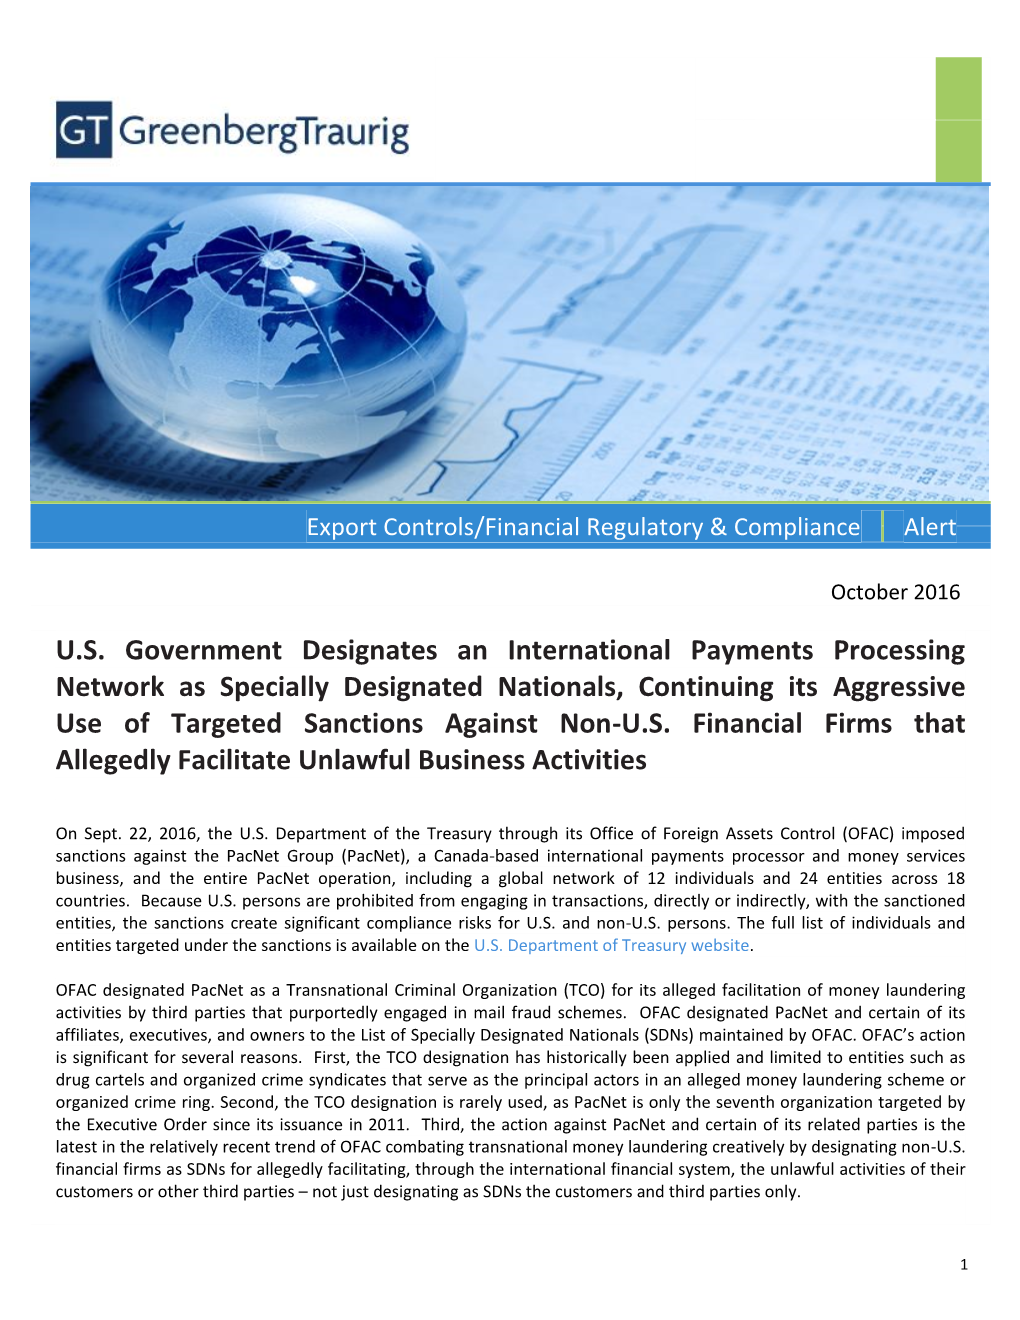 U.S. Government Designates an International Payments Processing